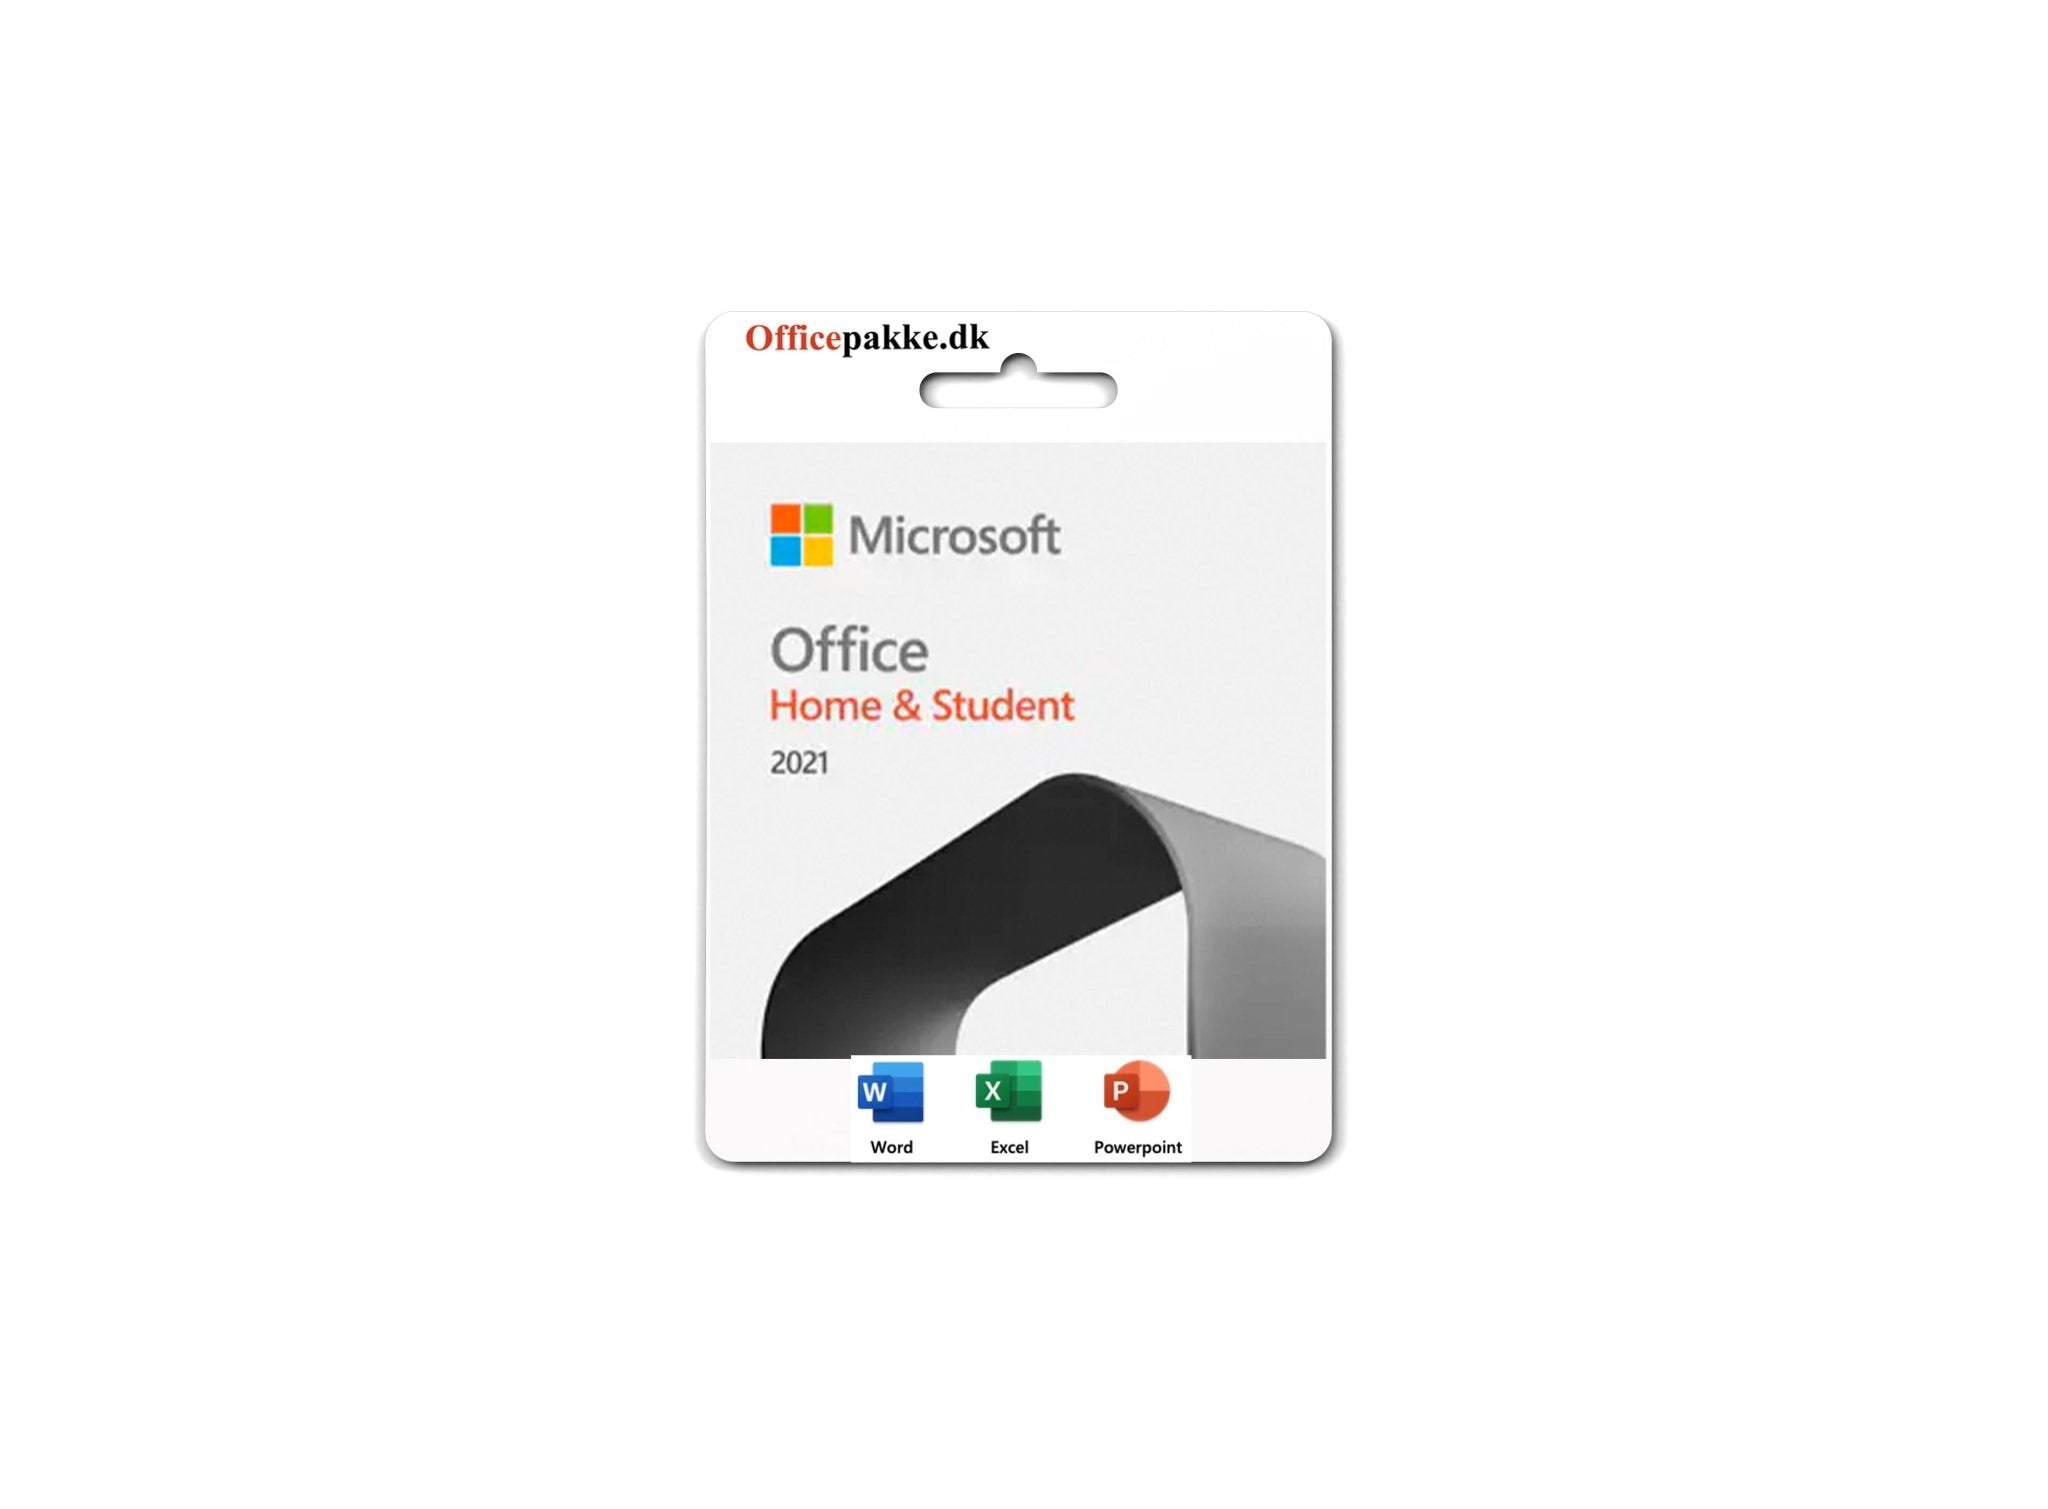 Microsoft Office Home & Student 2021 til Windows - officepakke.dkMicrosoft Office Home & Student 2021 til Windowsofficepakke.dkofficepakke.dk